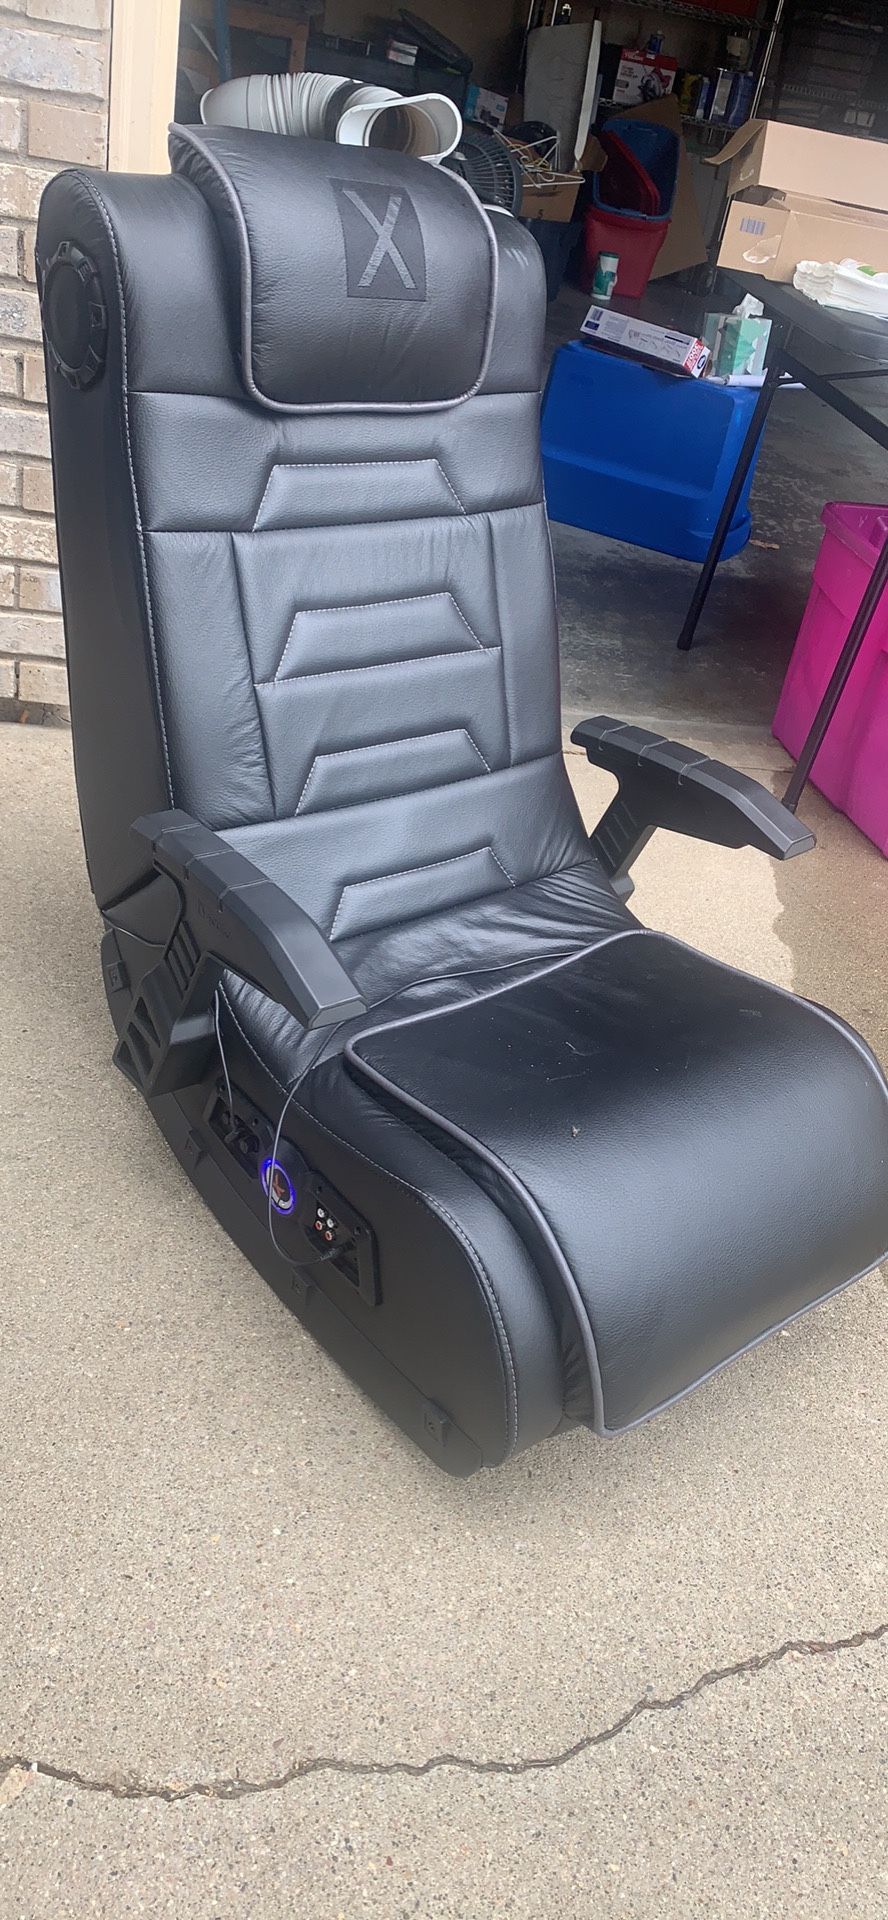 Wireless X rocker pro gaming chair